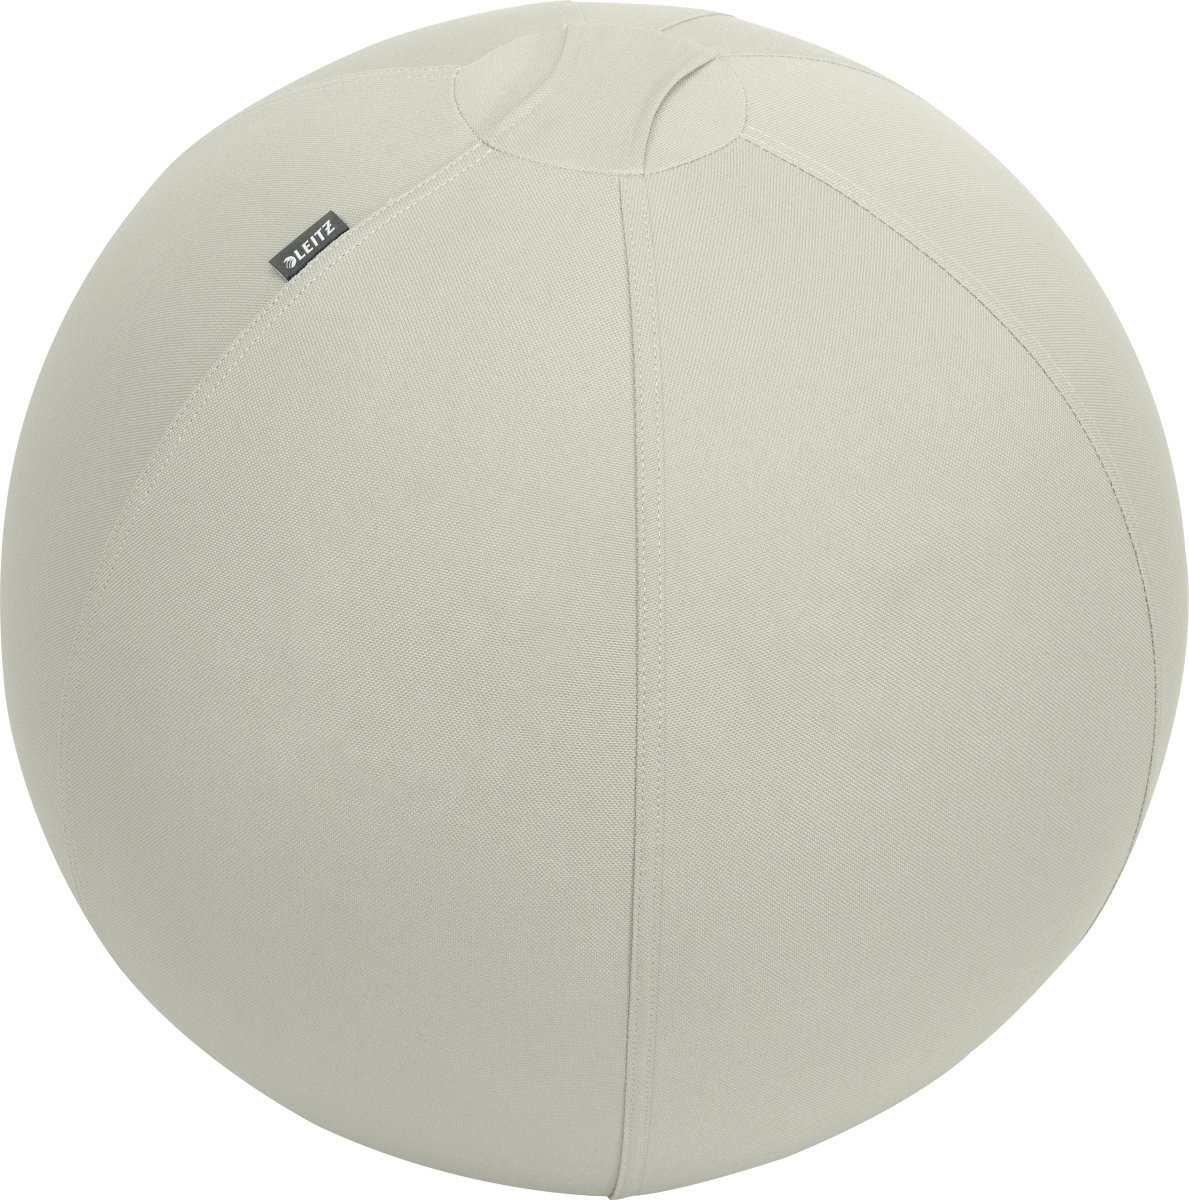 Leitz Ergo Active balancebold, grå, 55 cm